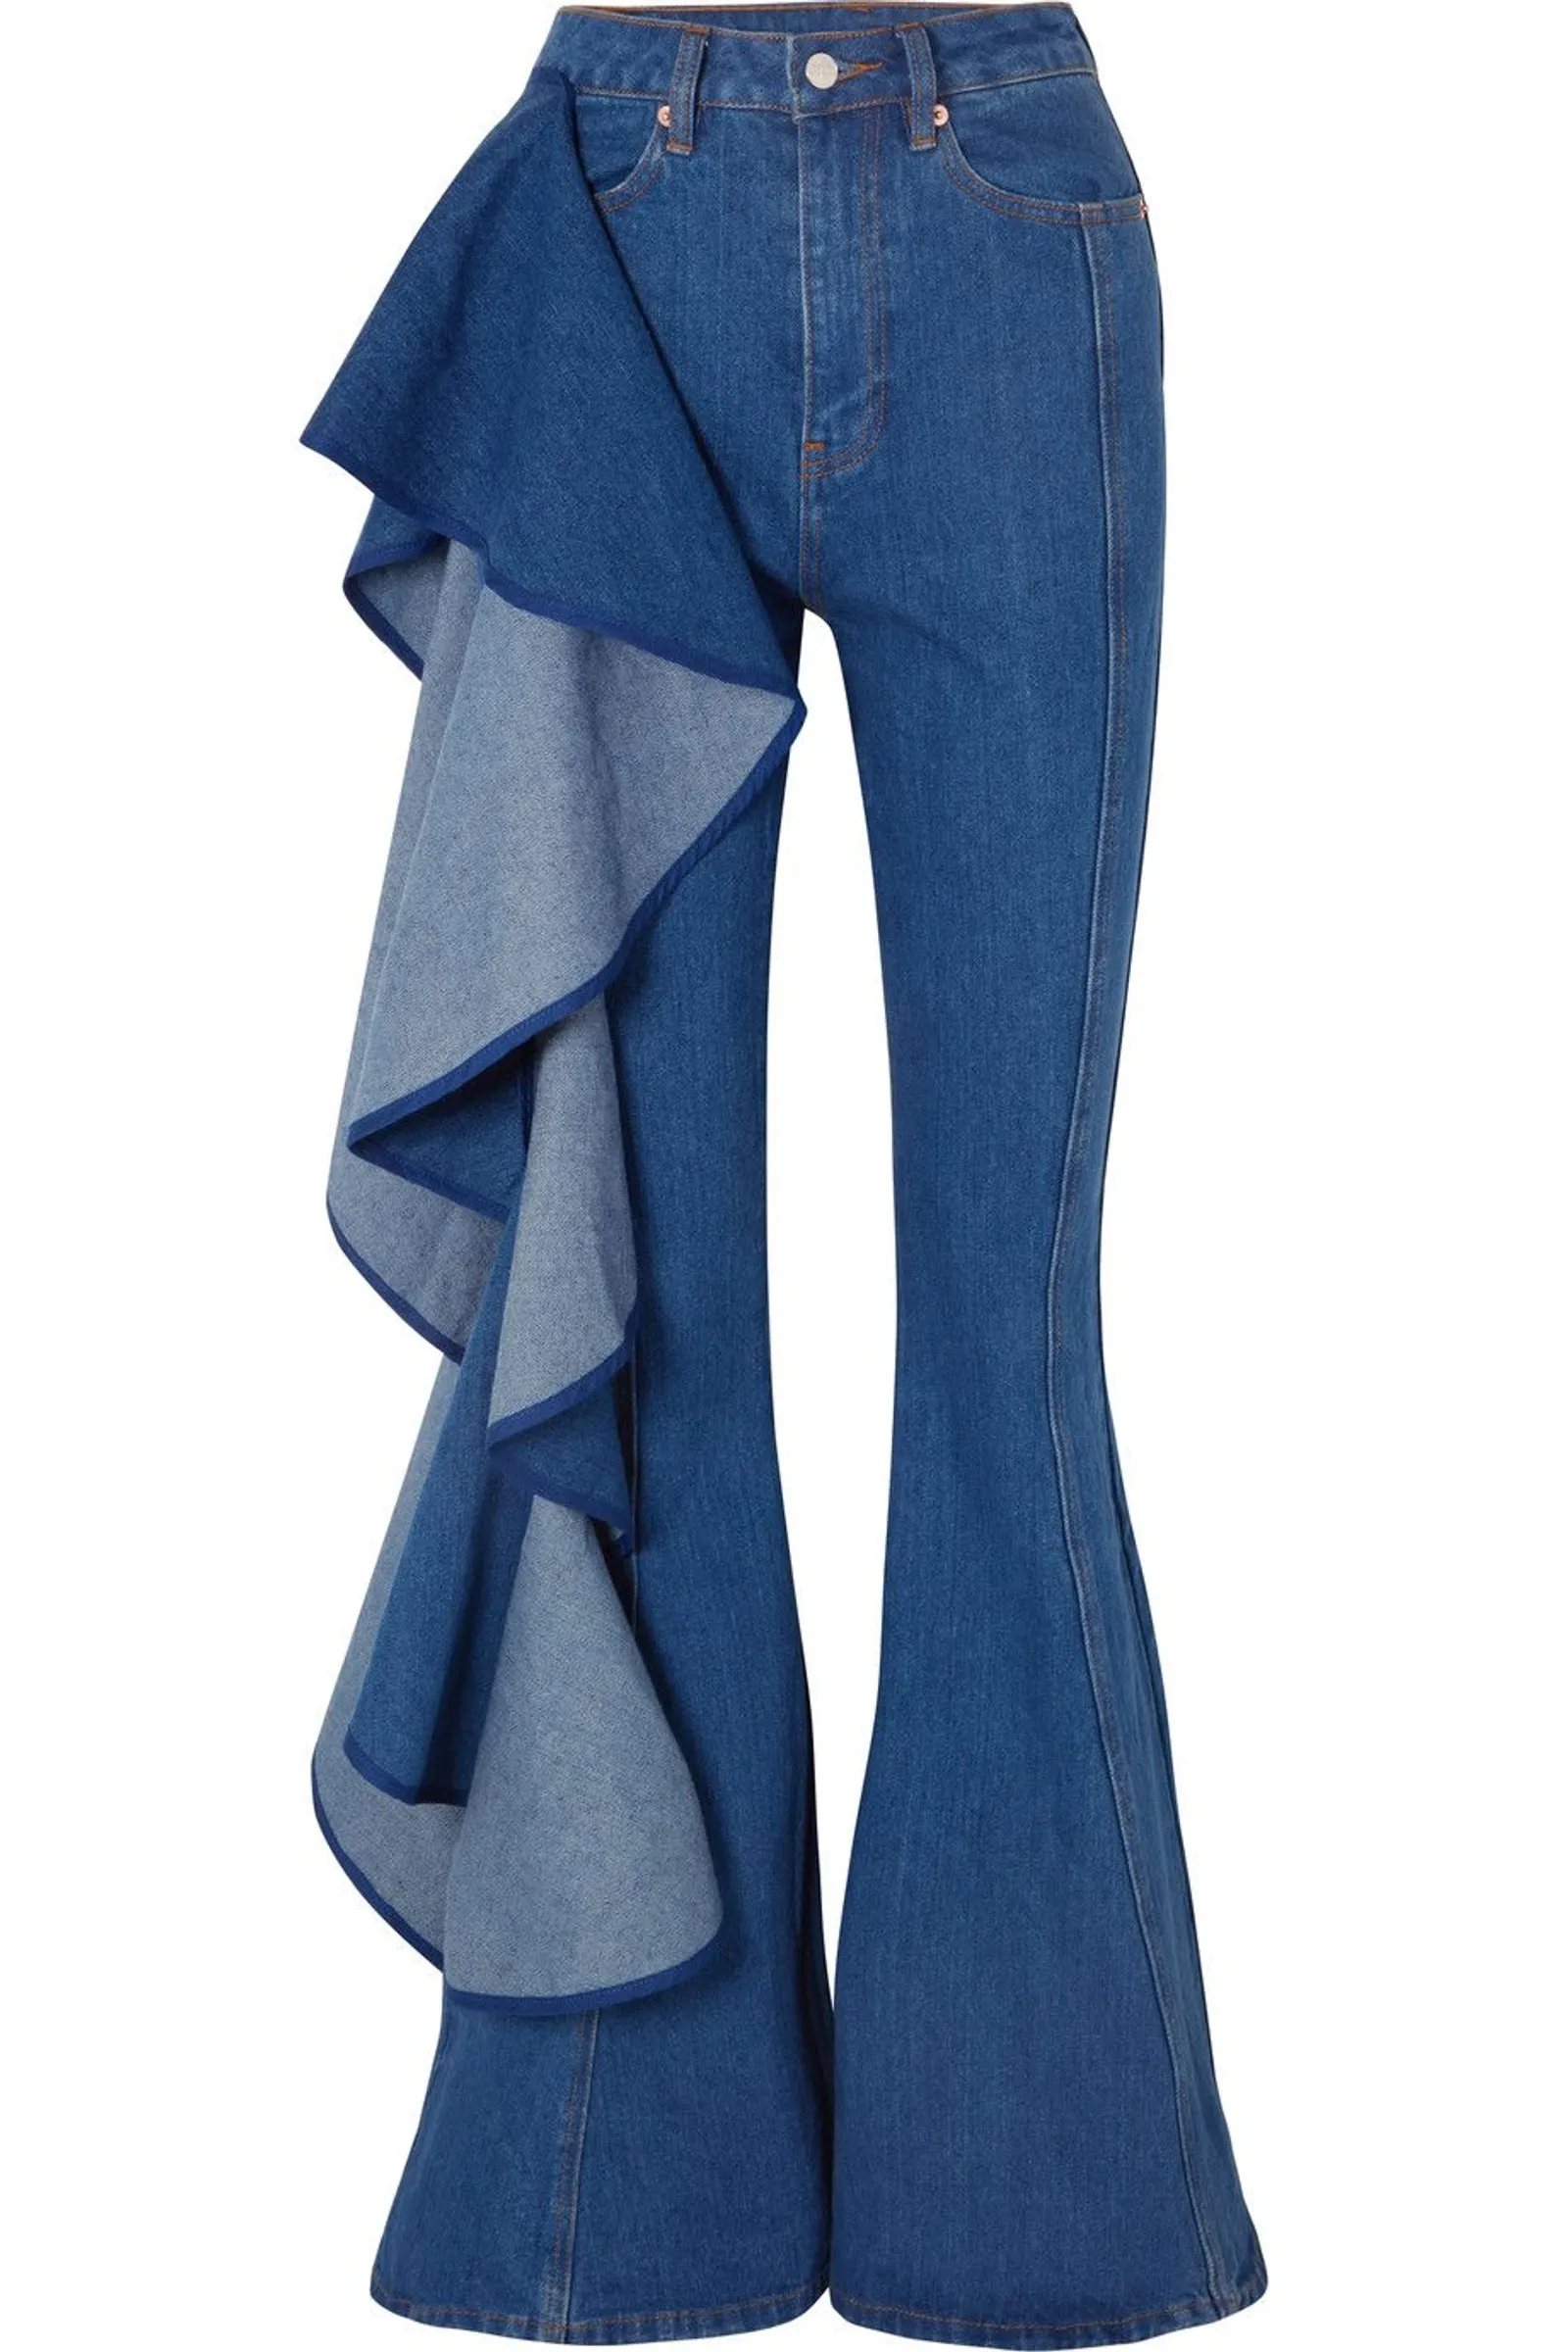 #PopbelaOOTD: Celana Jeans Unik untuk yang Mau Tampil Beda